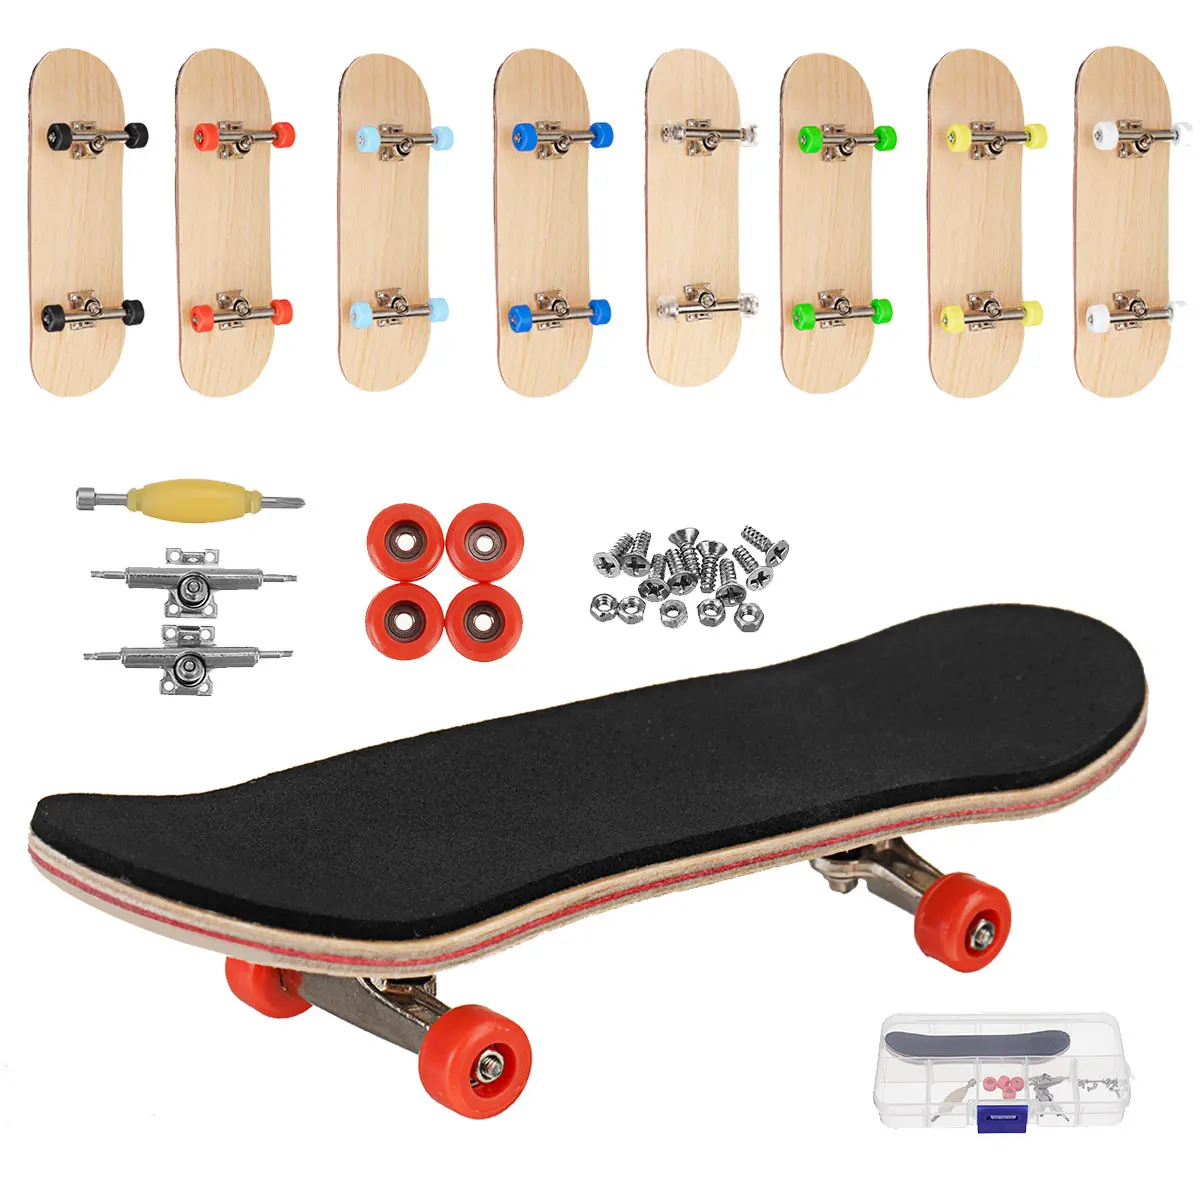 Mini DIY Complete Wooden Fingerboard Finger Desk Skate Board Wood Toy Gift Xmas 